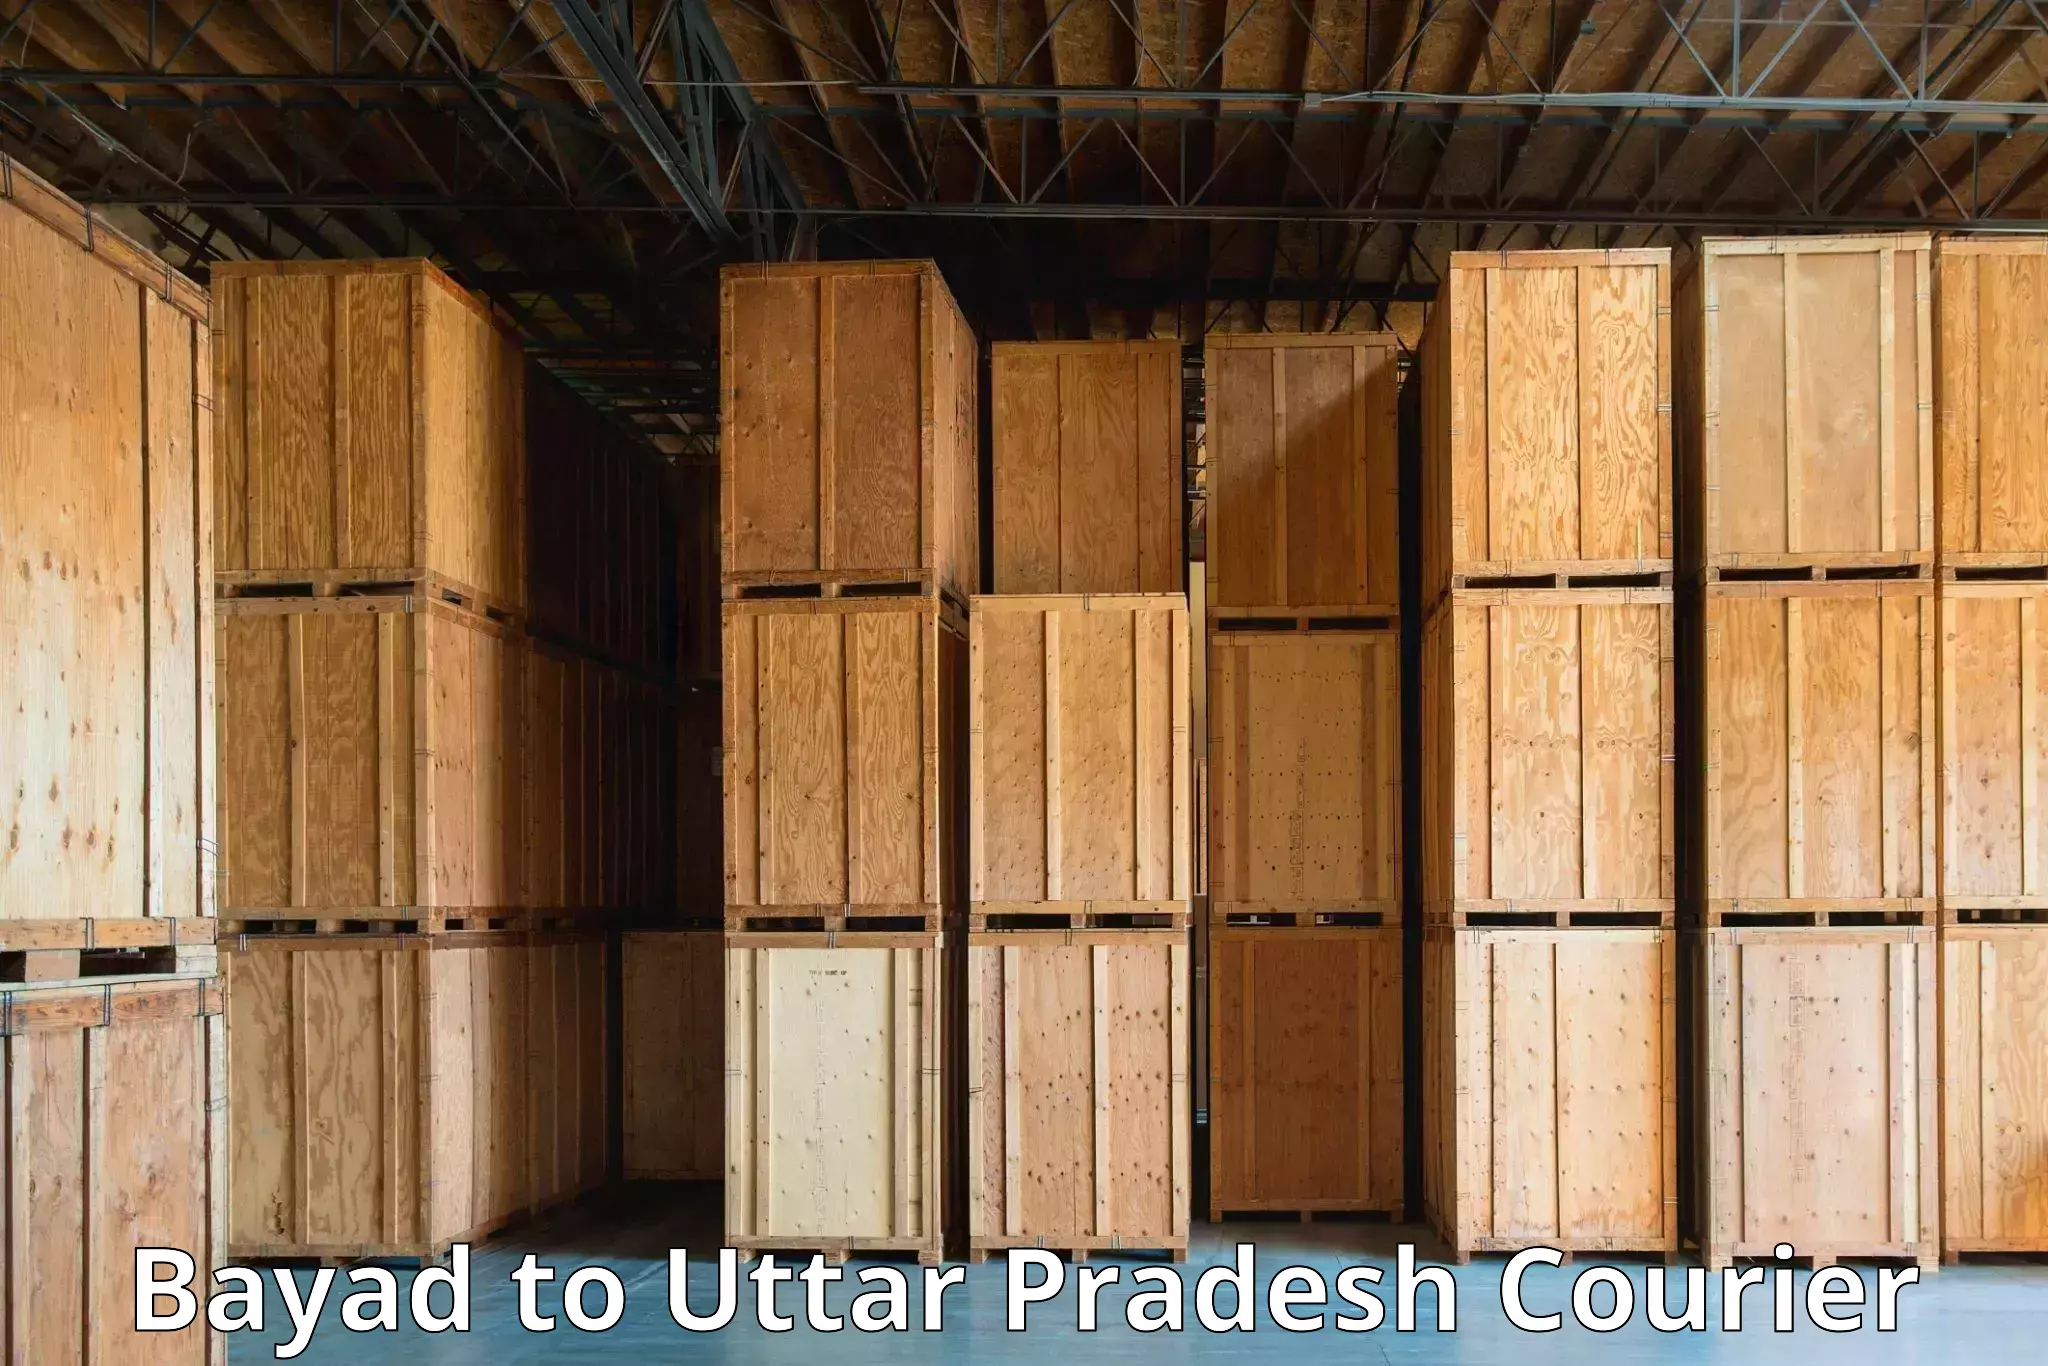 High-speed parcel service Bayad to Uttar Pradesh